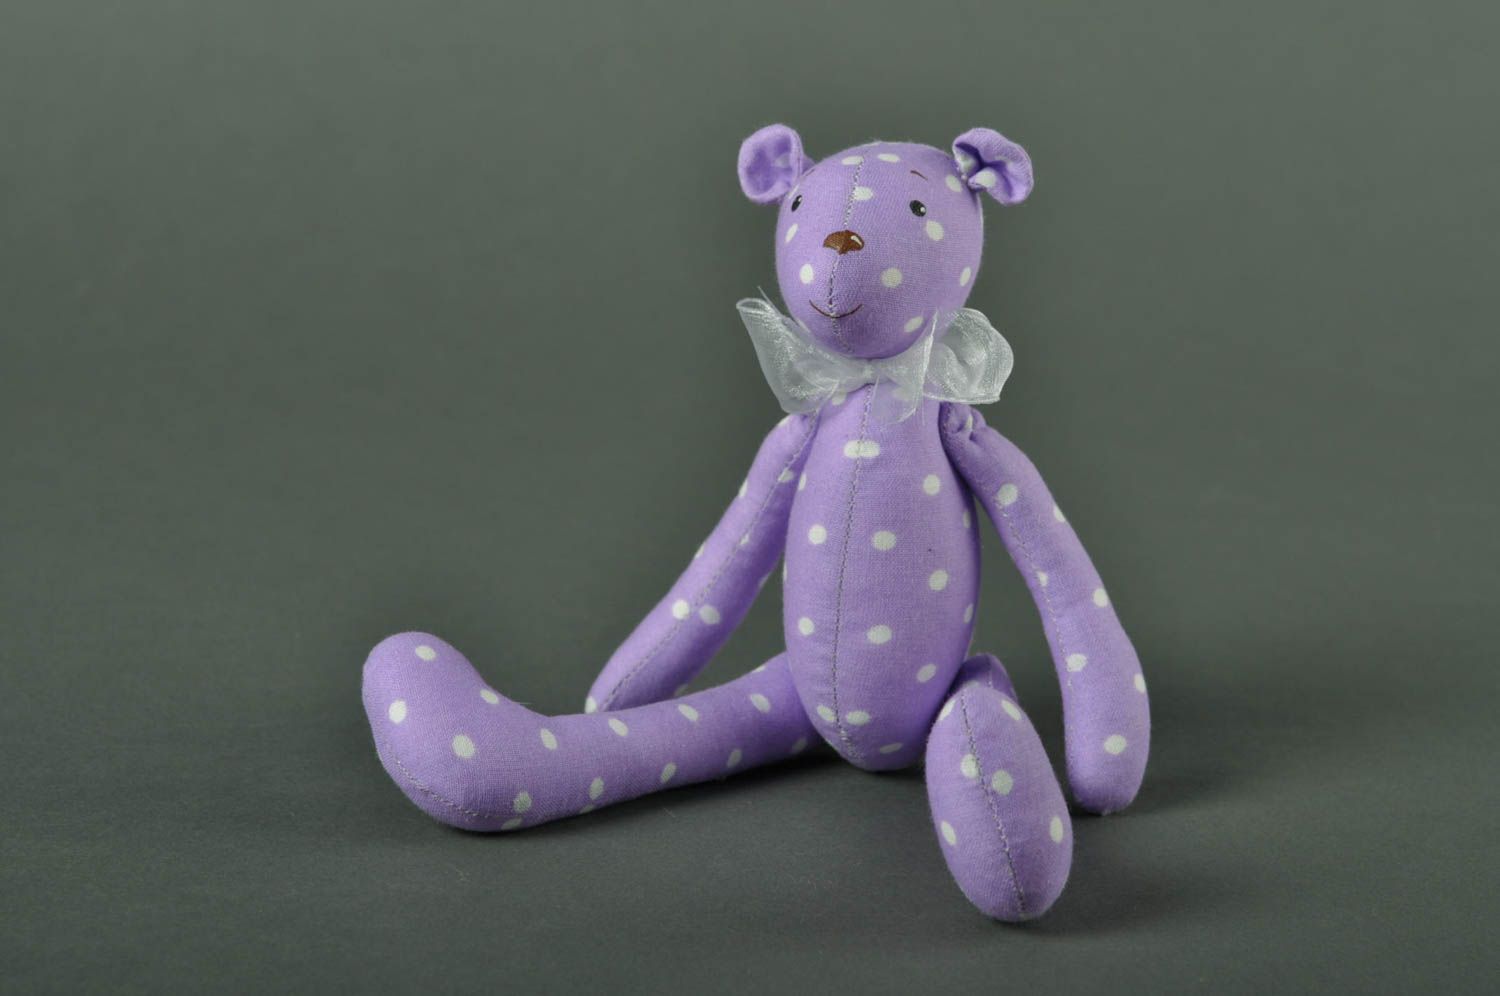 Handmade toy unusual toy for baby gift ideas designer toy nursery decor photo 1